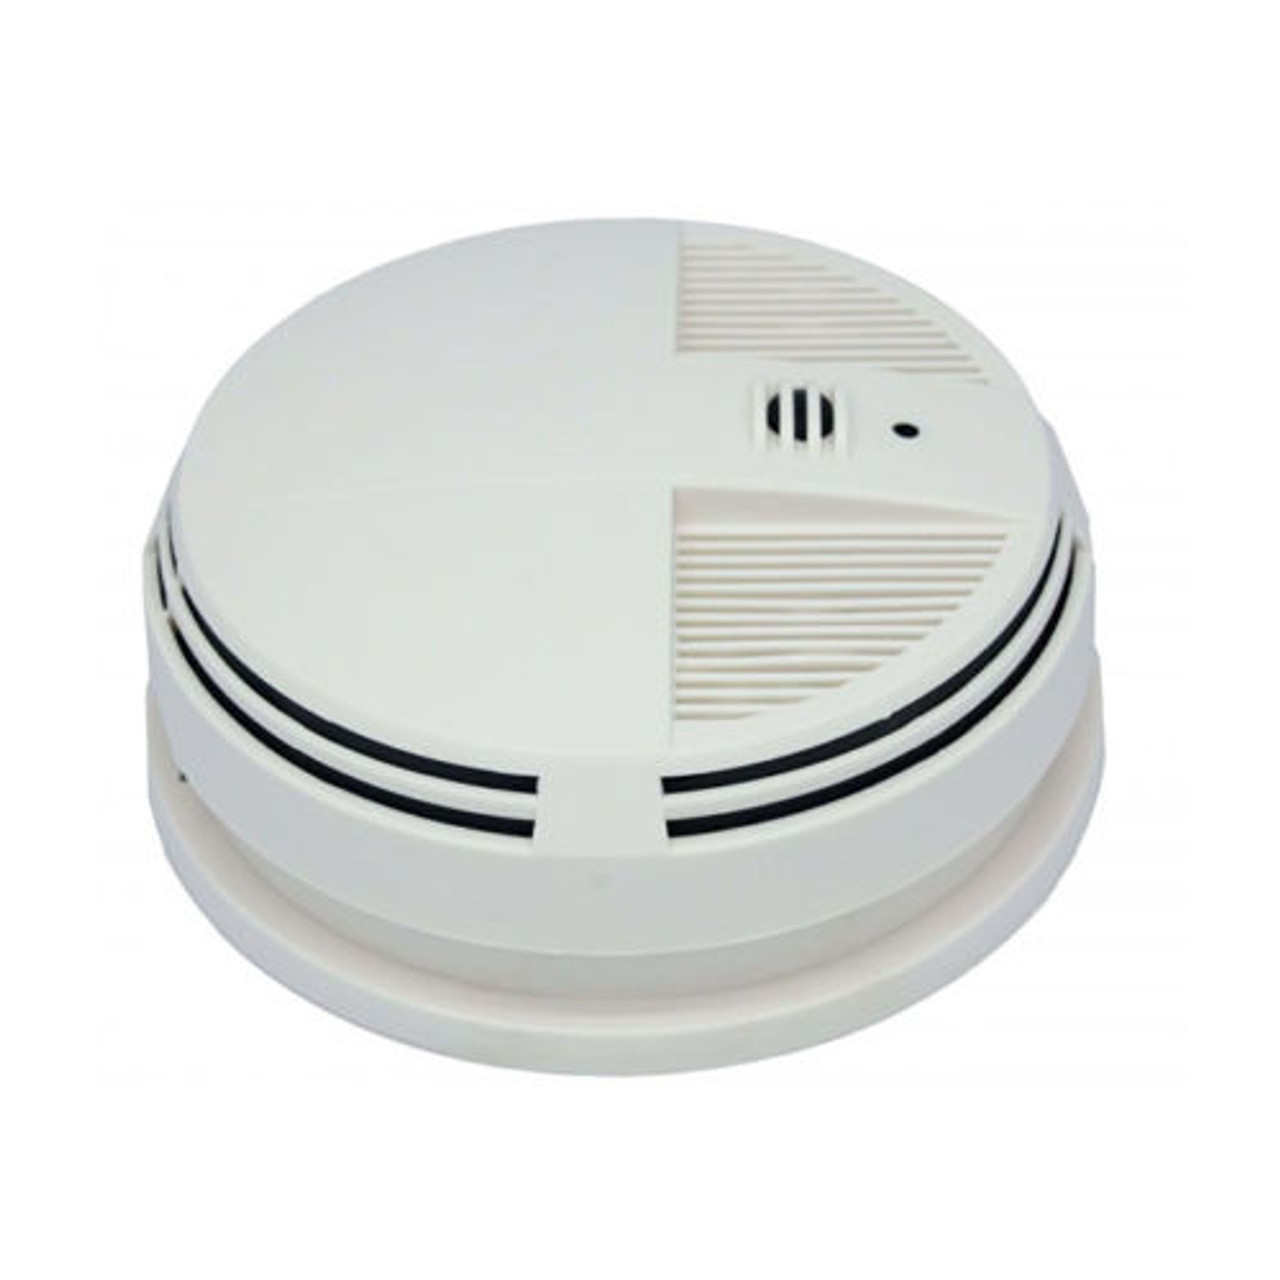 wireless smoke detector camera